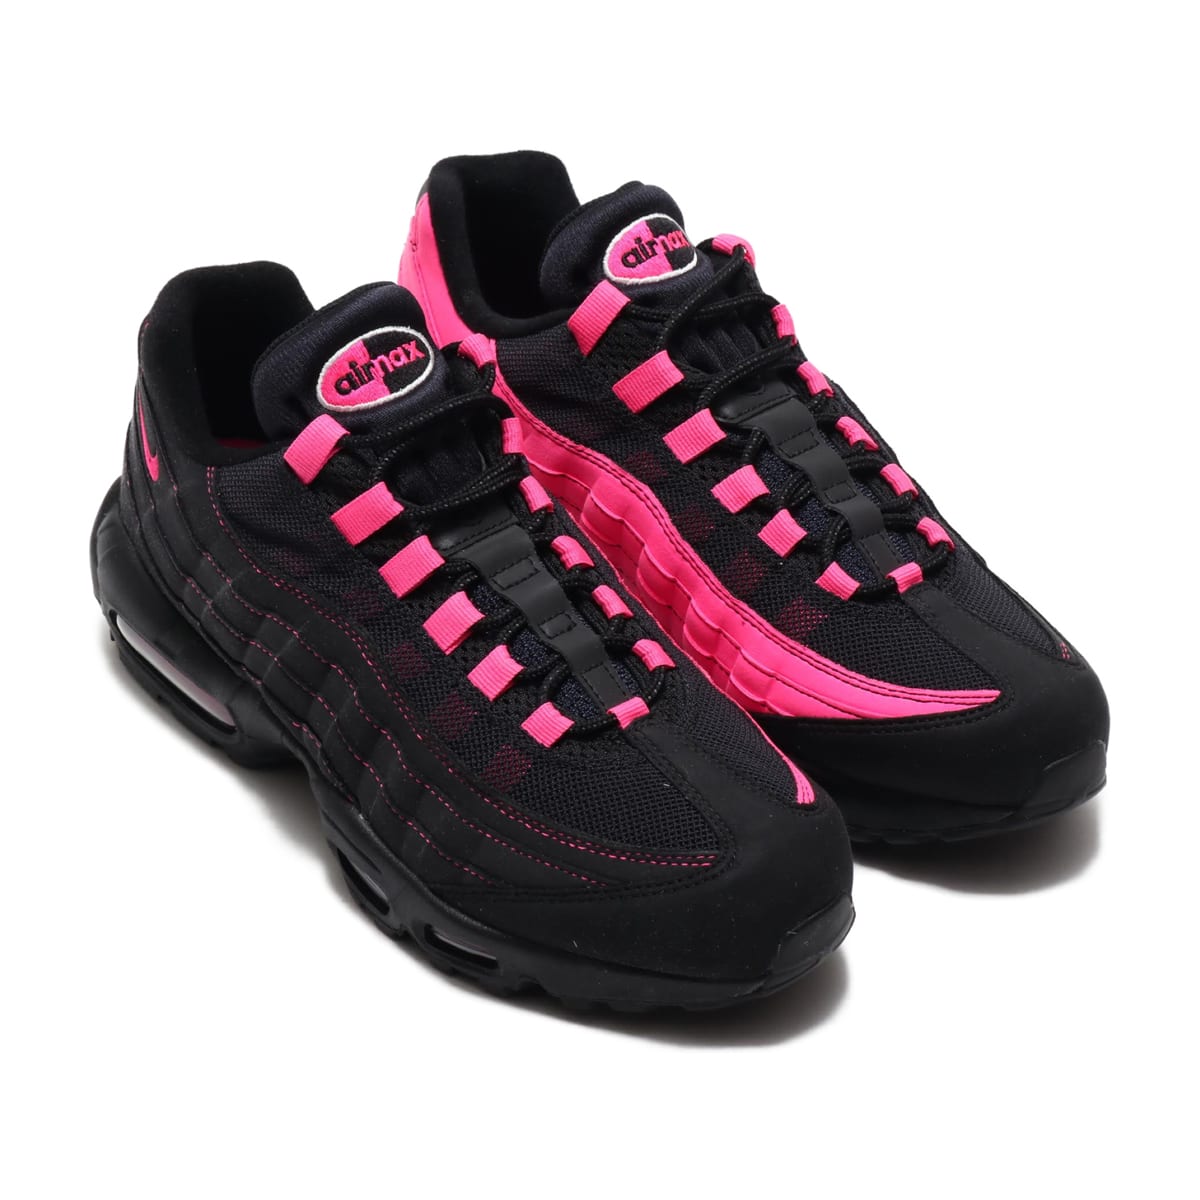 Nike Air Max 95 Og Black Pink Blast Pink Blast 19fa S